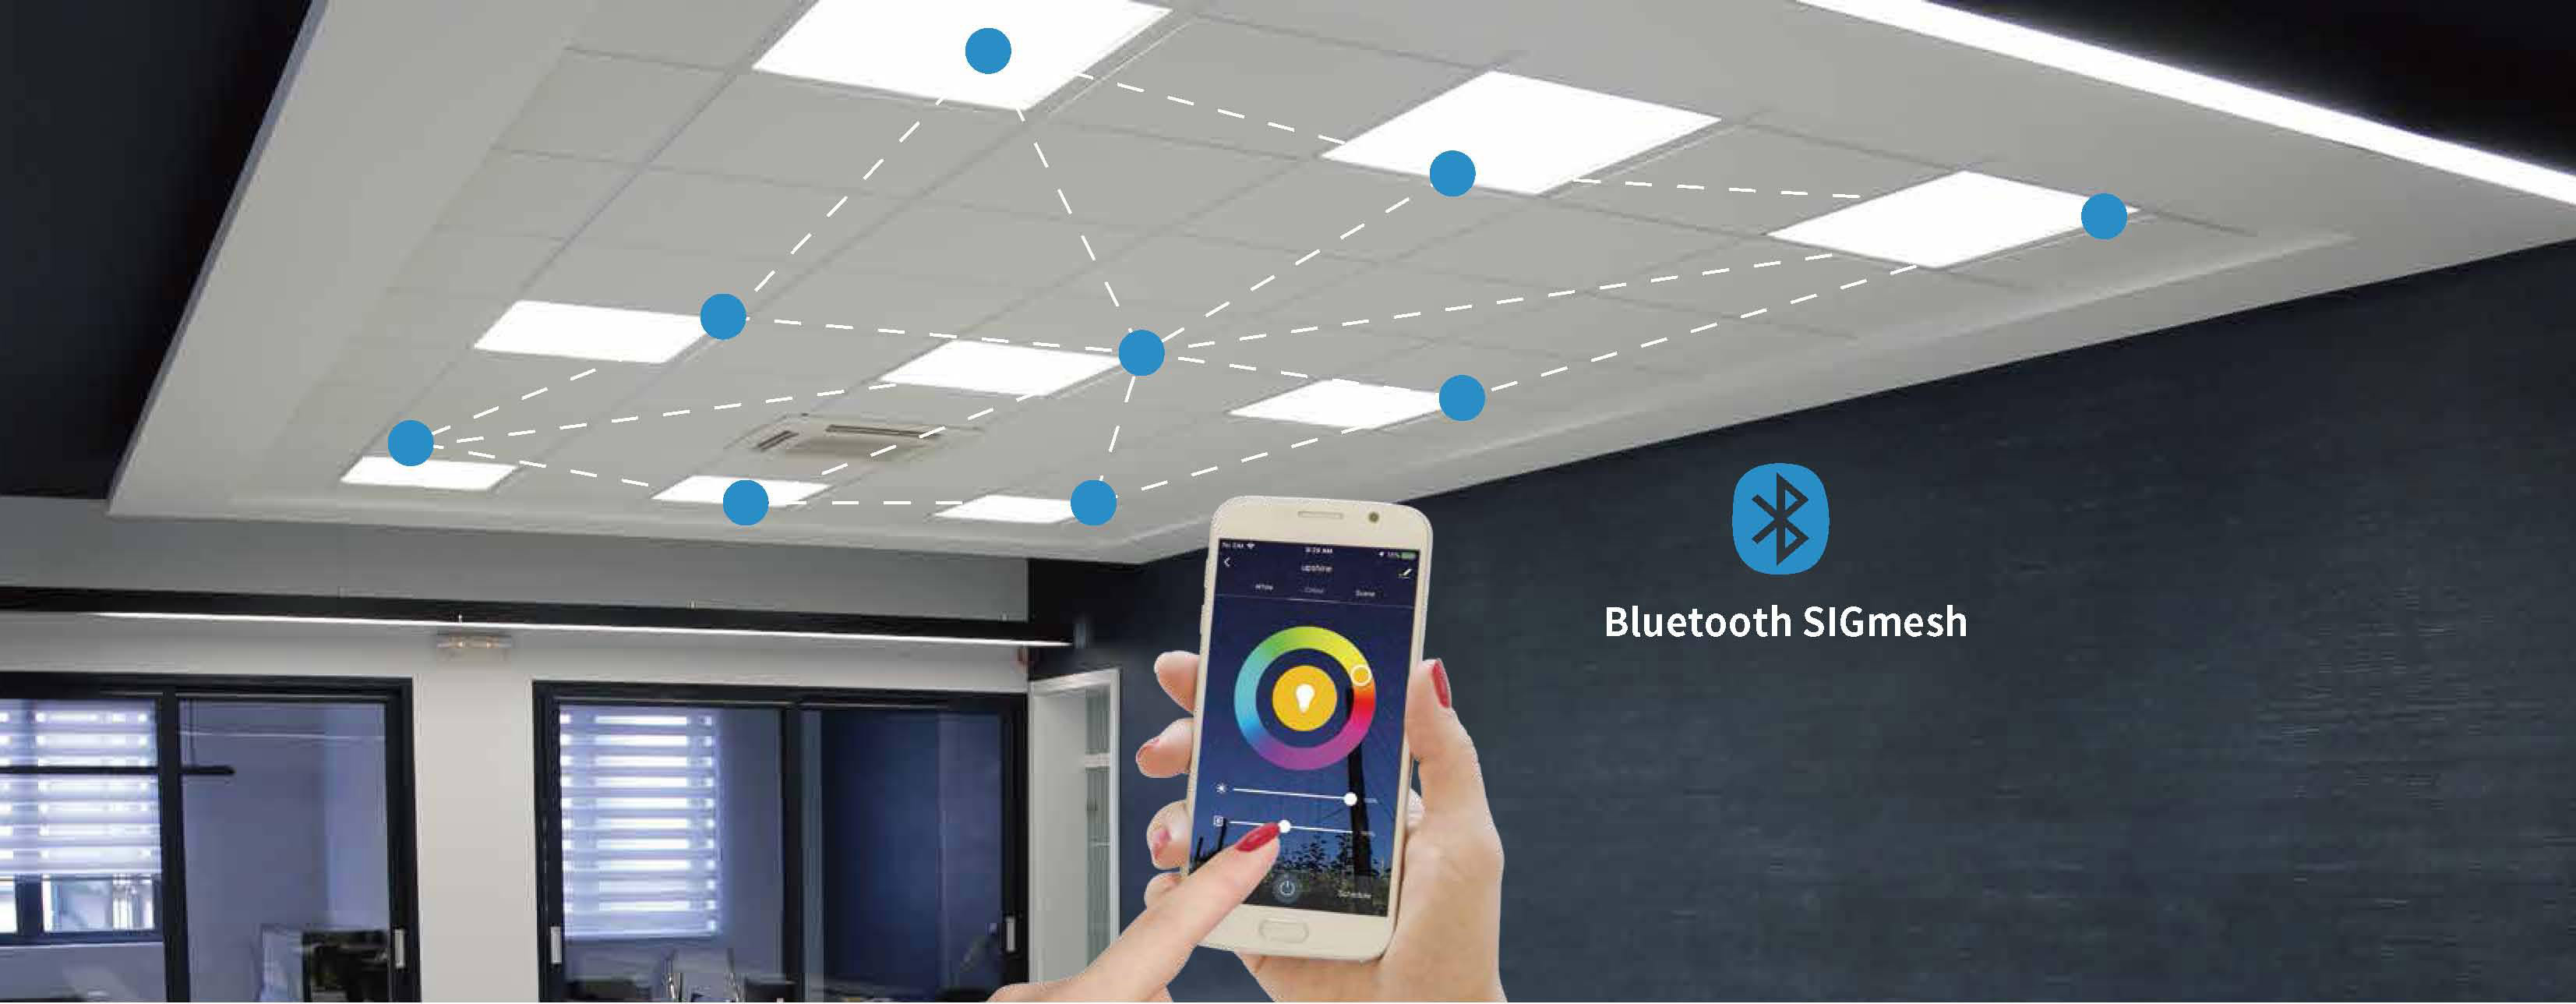 About Bluetooth Smart Technology of Lighting Revolution